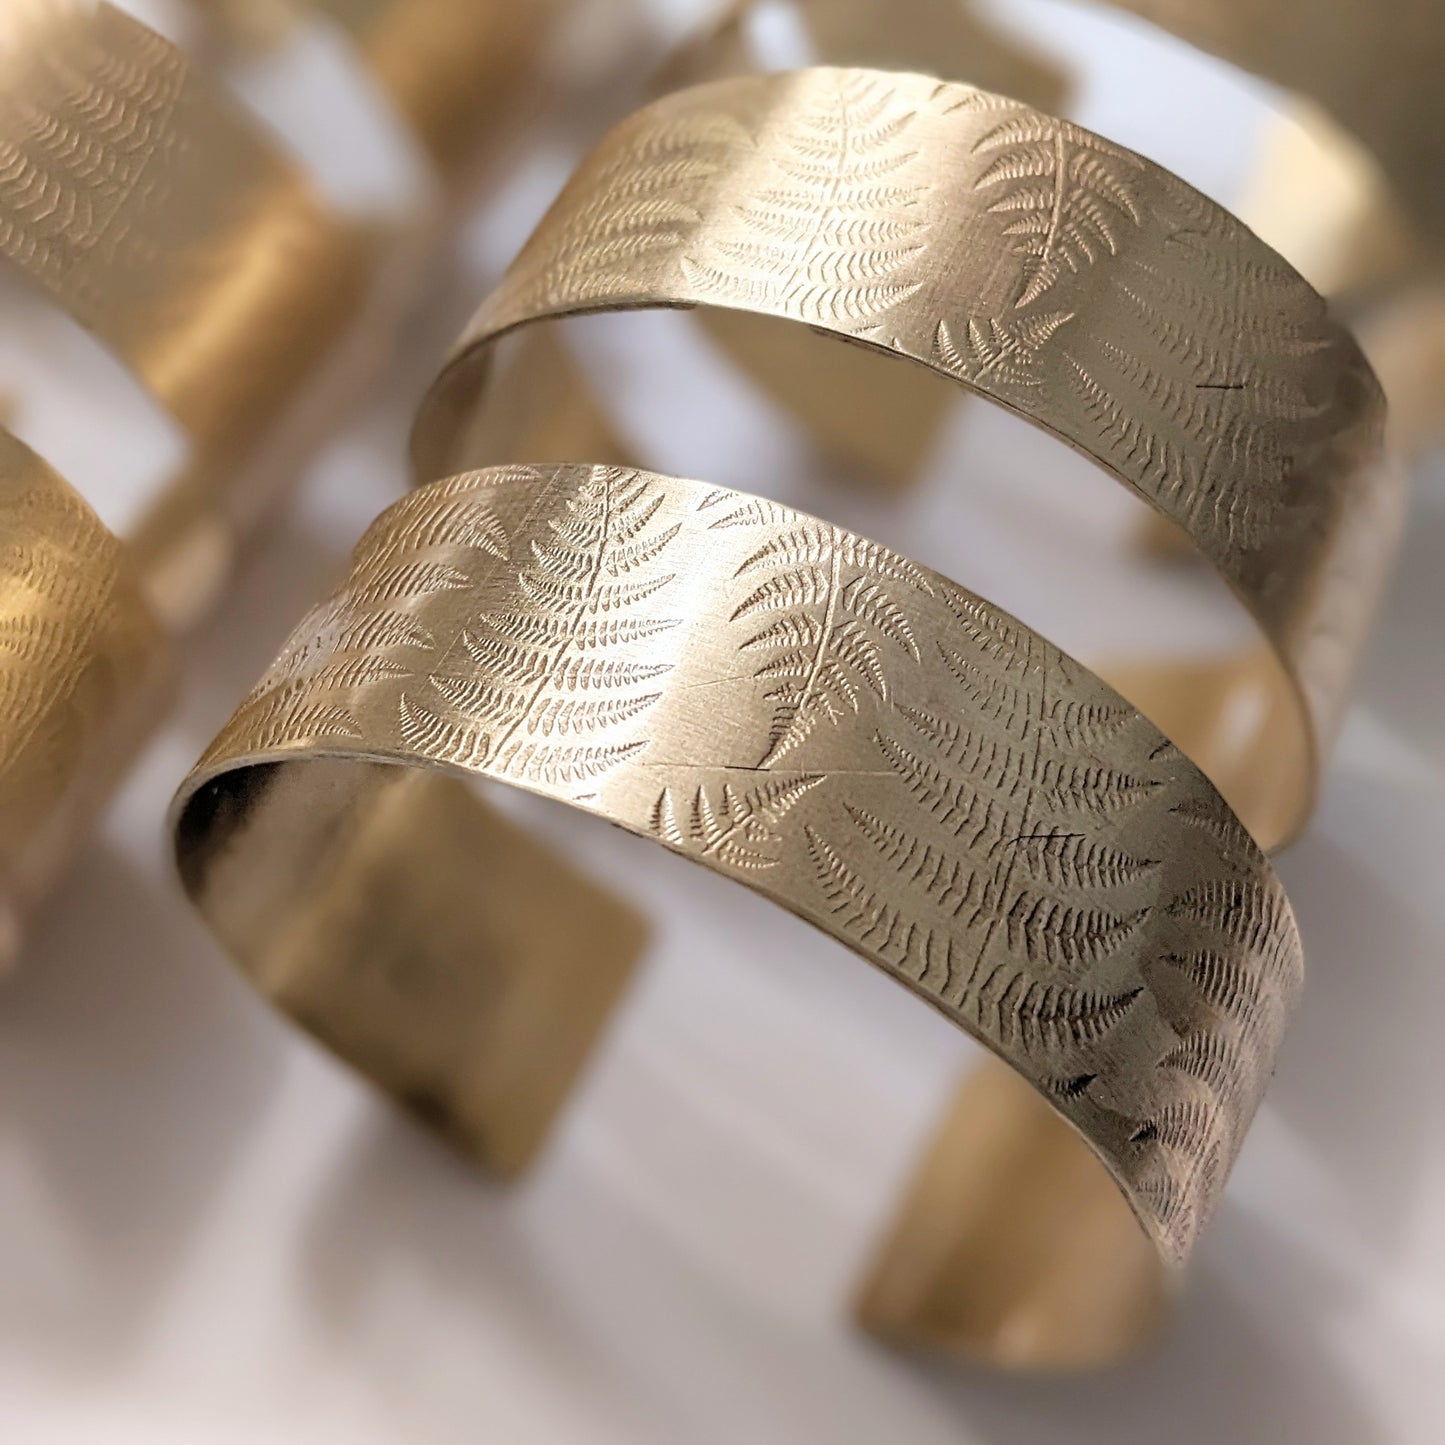 Brass Cuff Bracelet with Fern Imprint